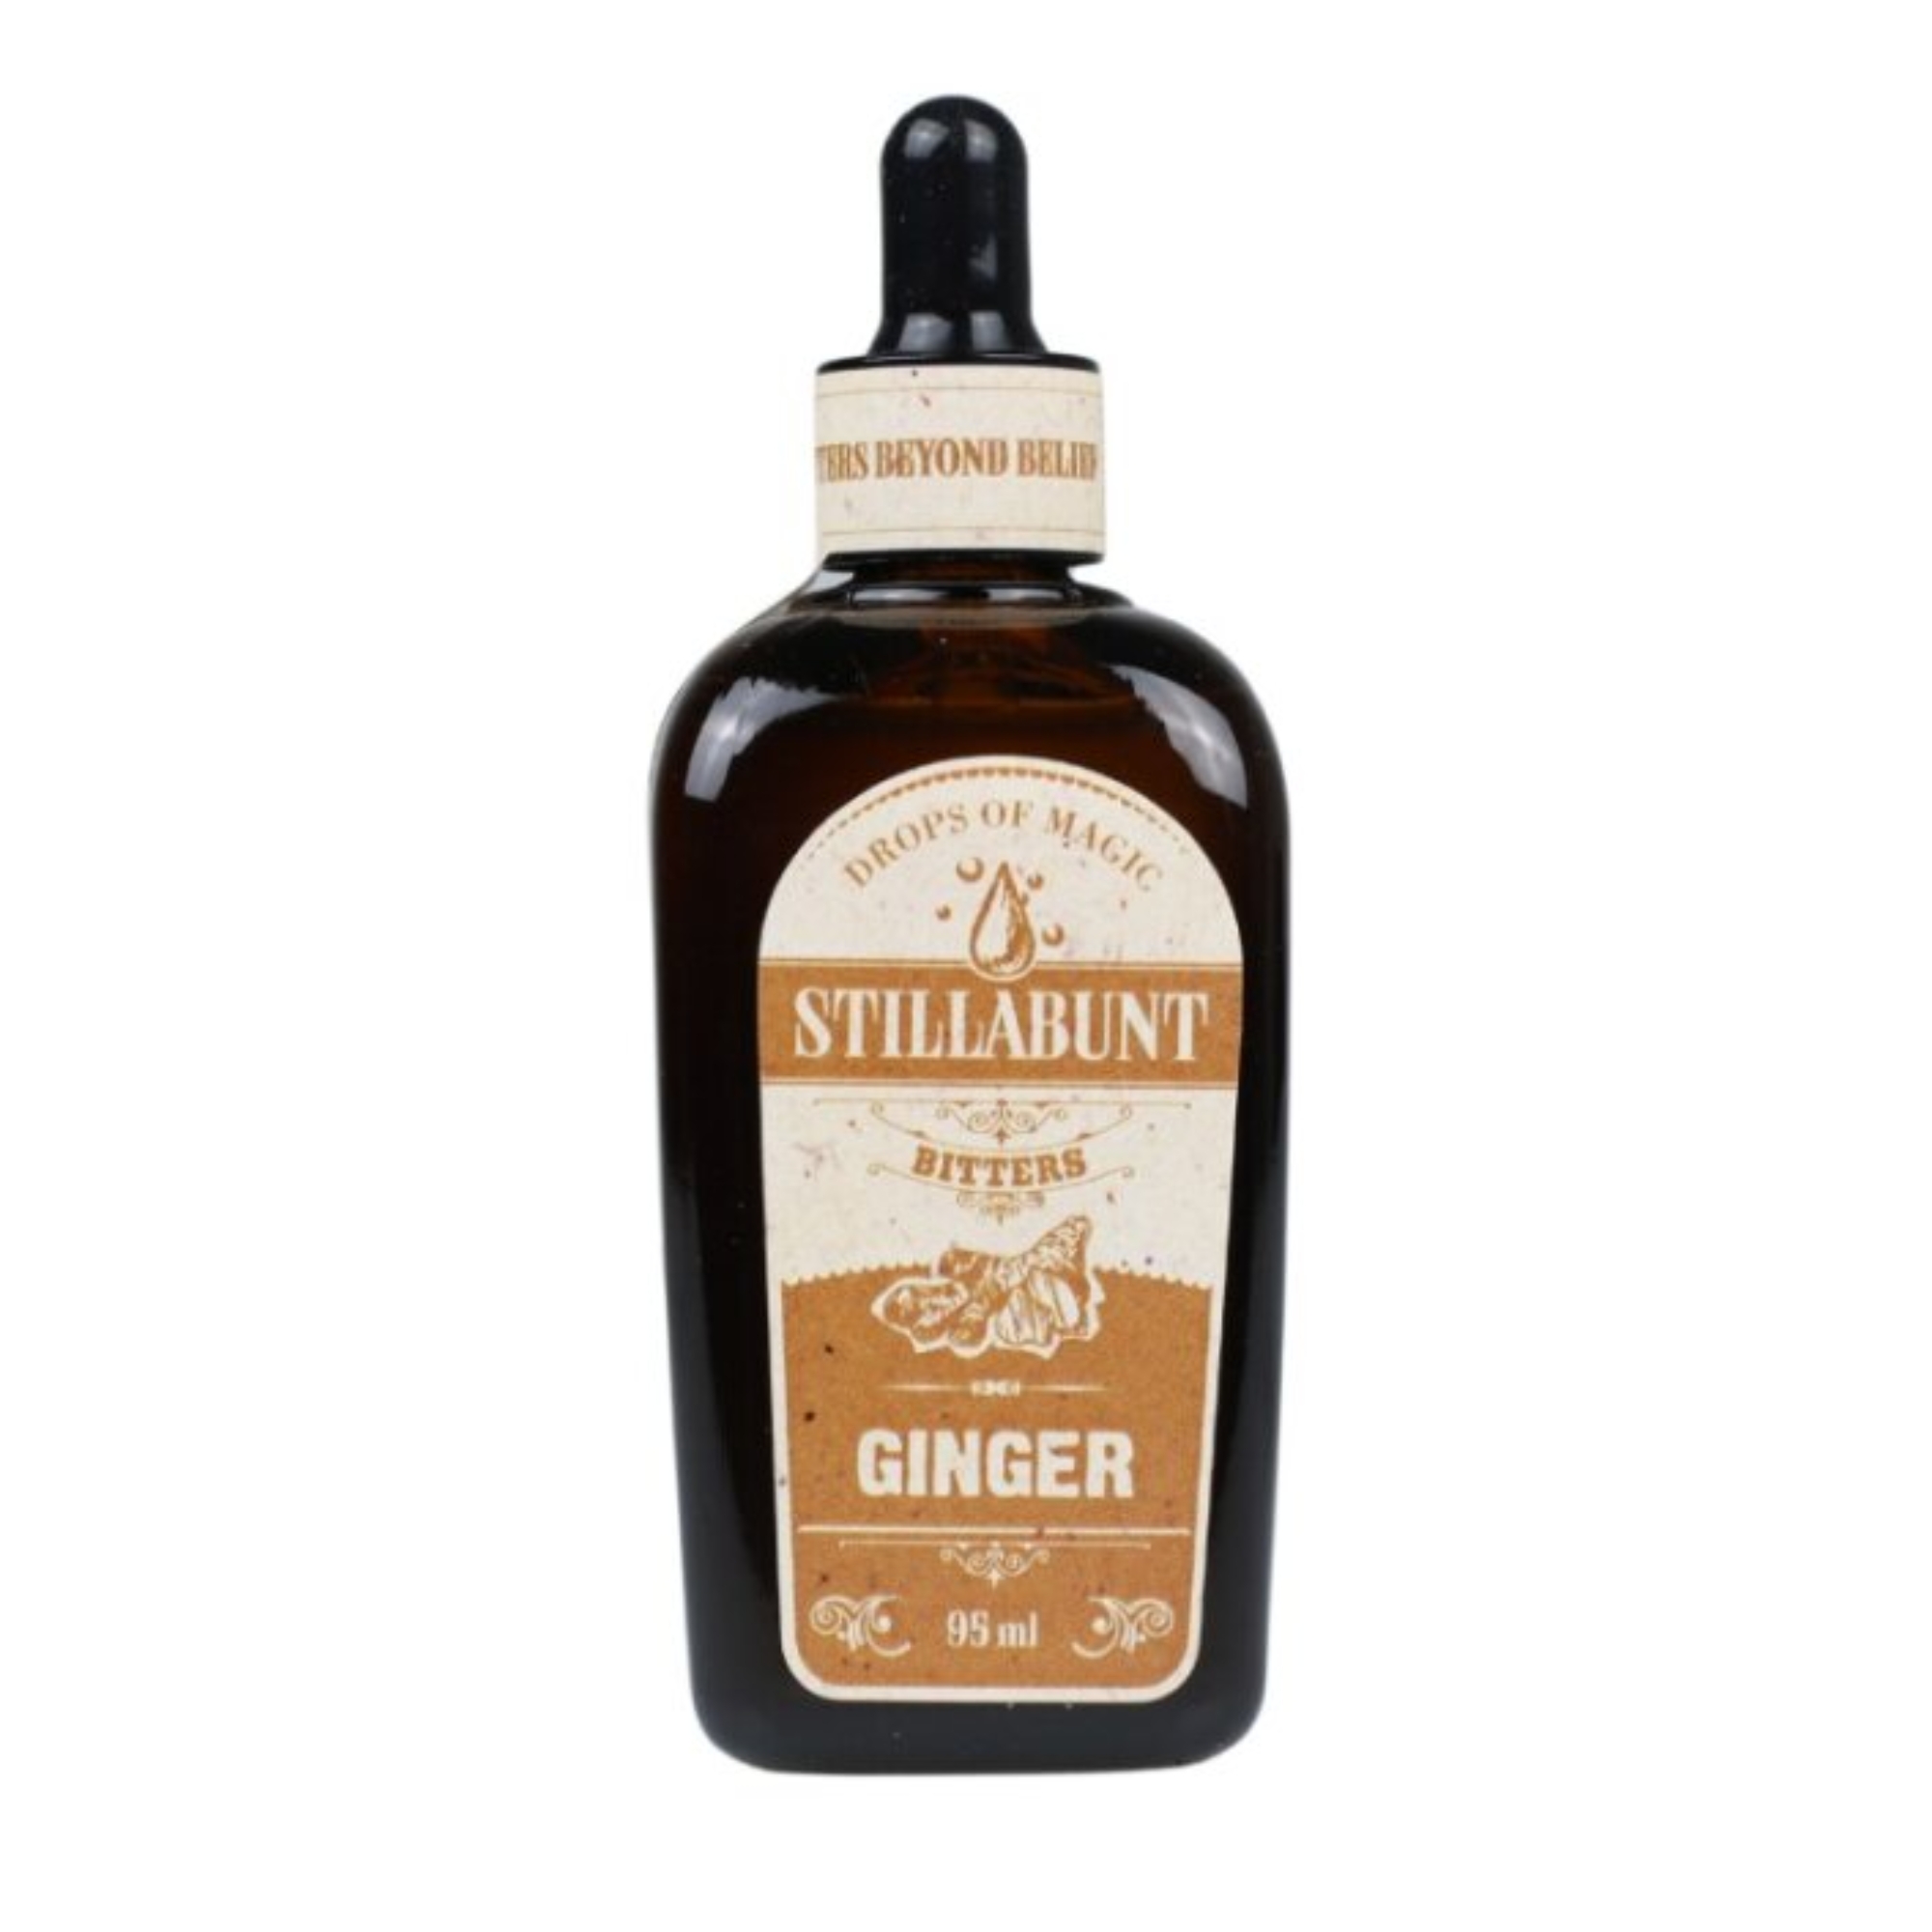 Stillabunt Ginger Bitters 95ml